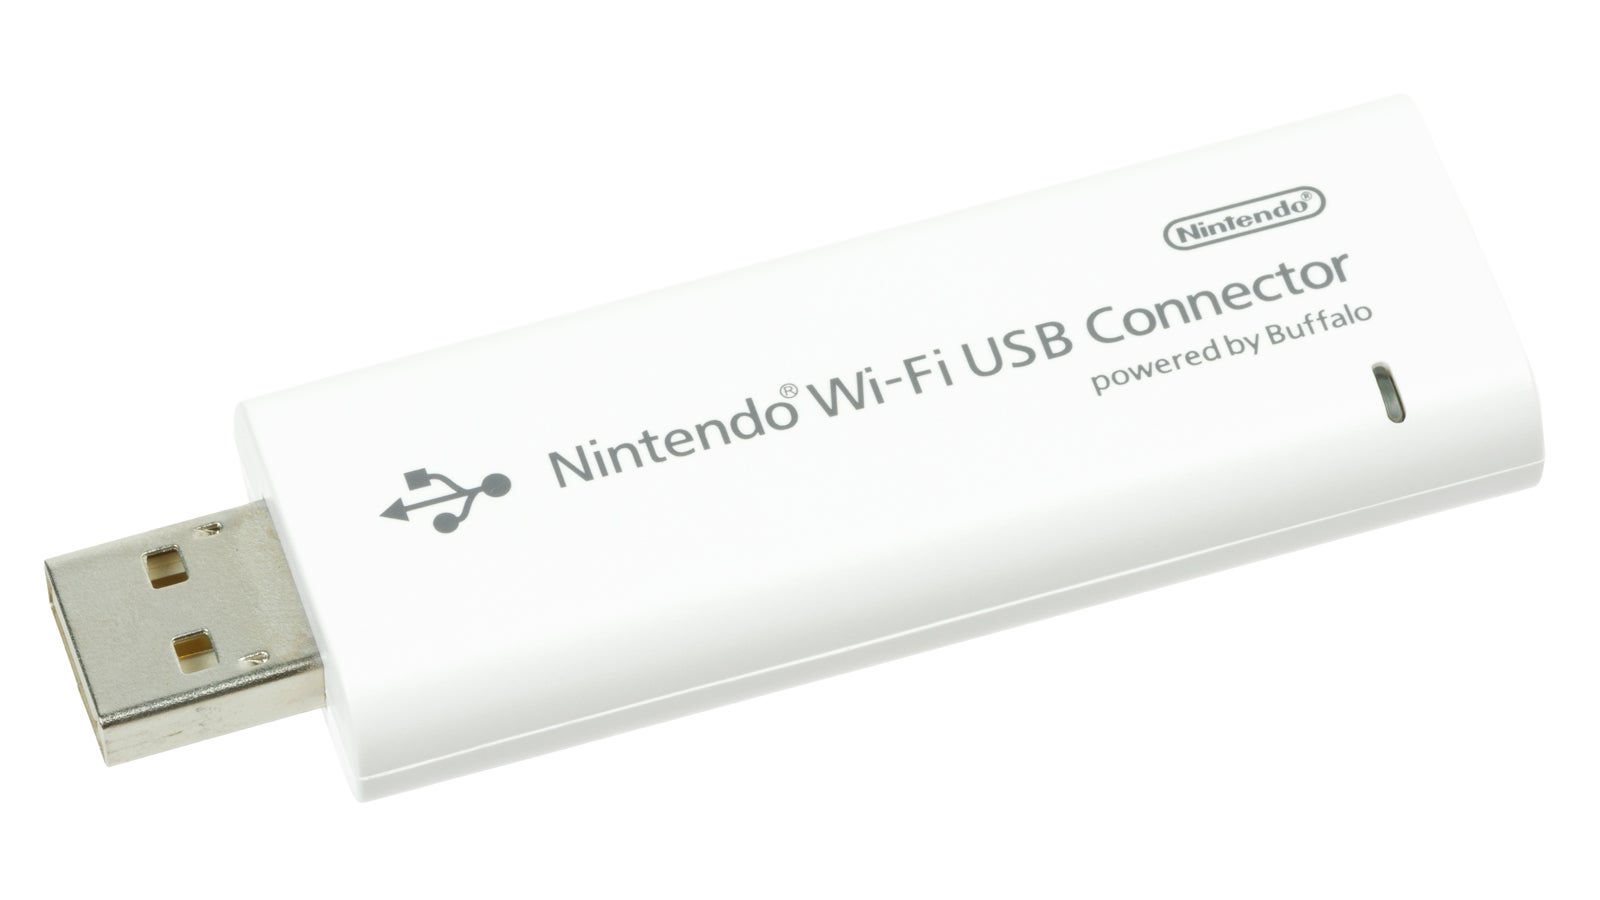 Nintendo's Wi-Fi dongle.